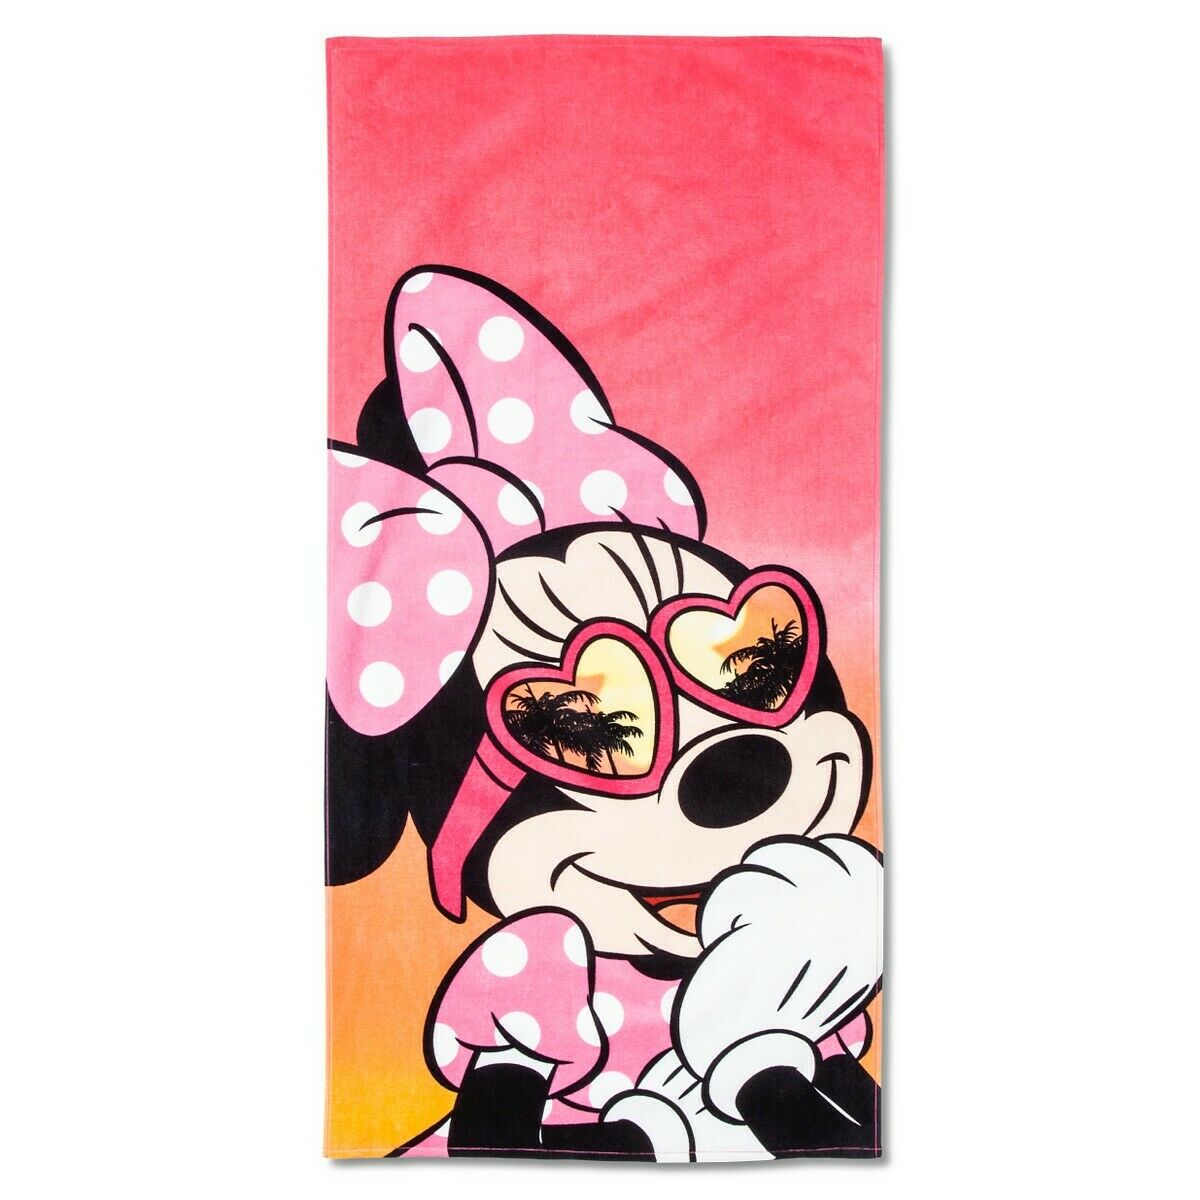 New Nwt Disney Minnie Mouse Kids Children Bath Beach Towel 28"x58" Pink Girls